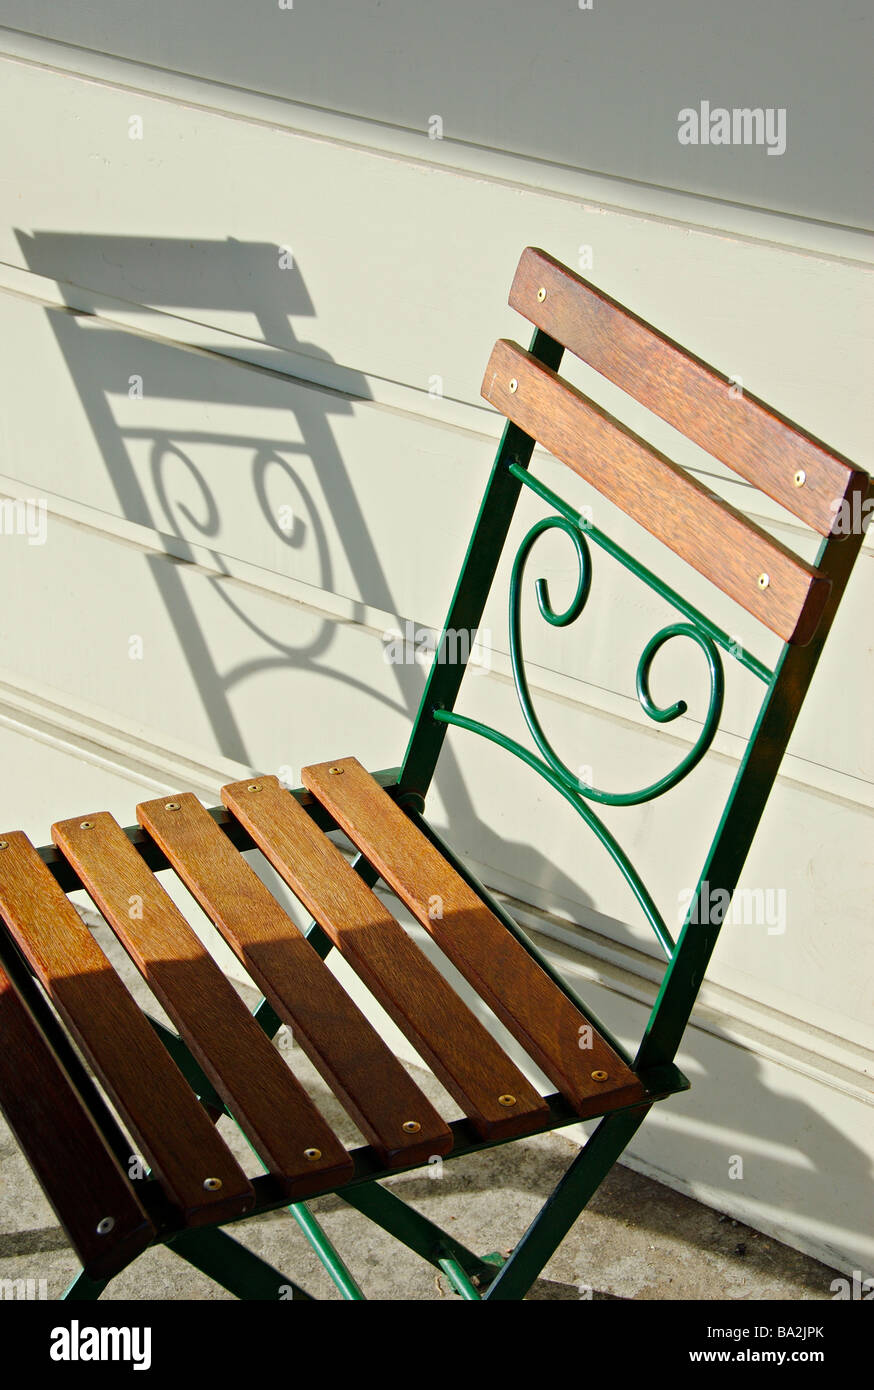 Chair and shadow pattern, Akaroa, New Zealand Stock Photo